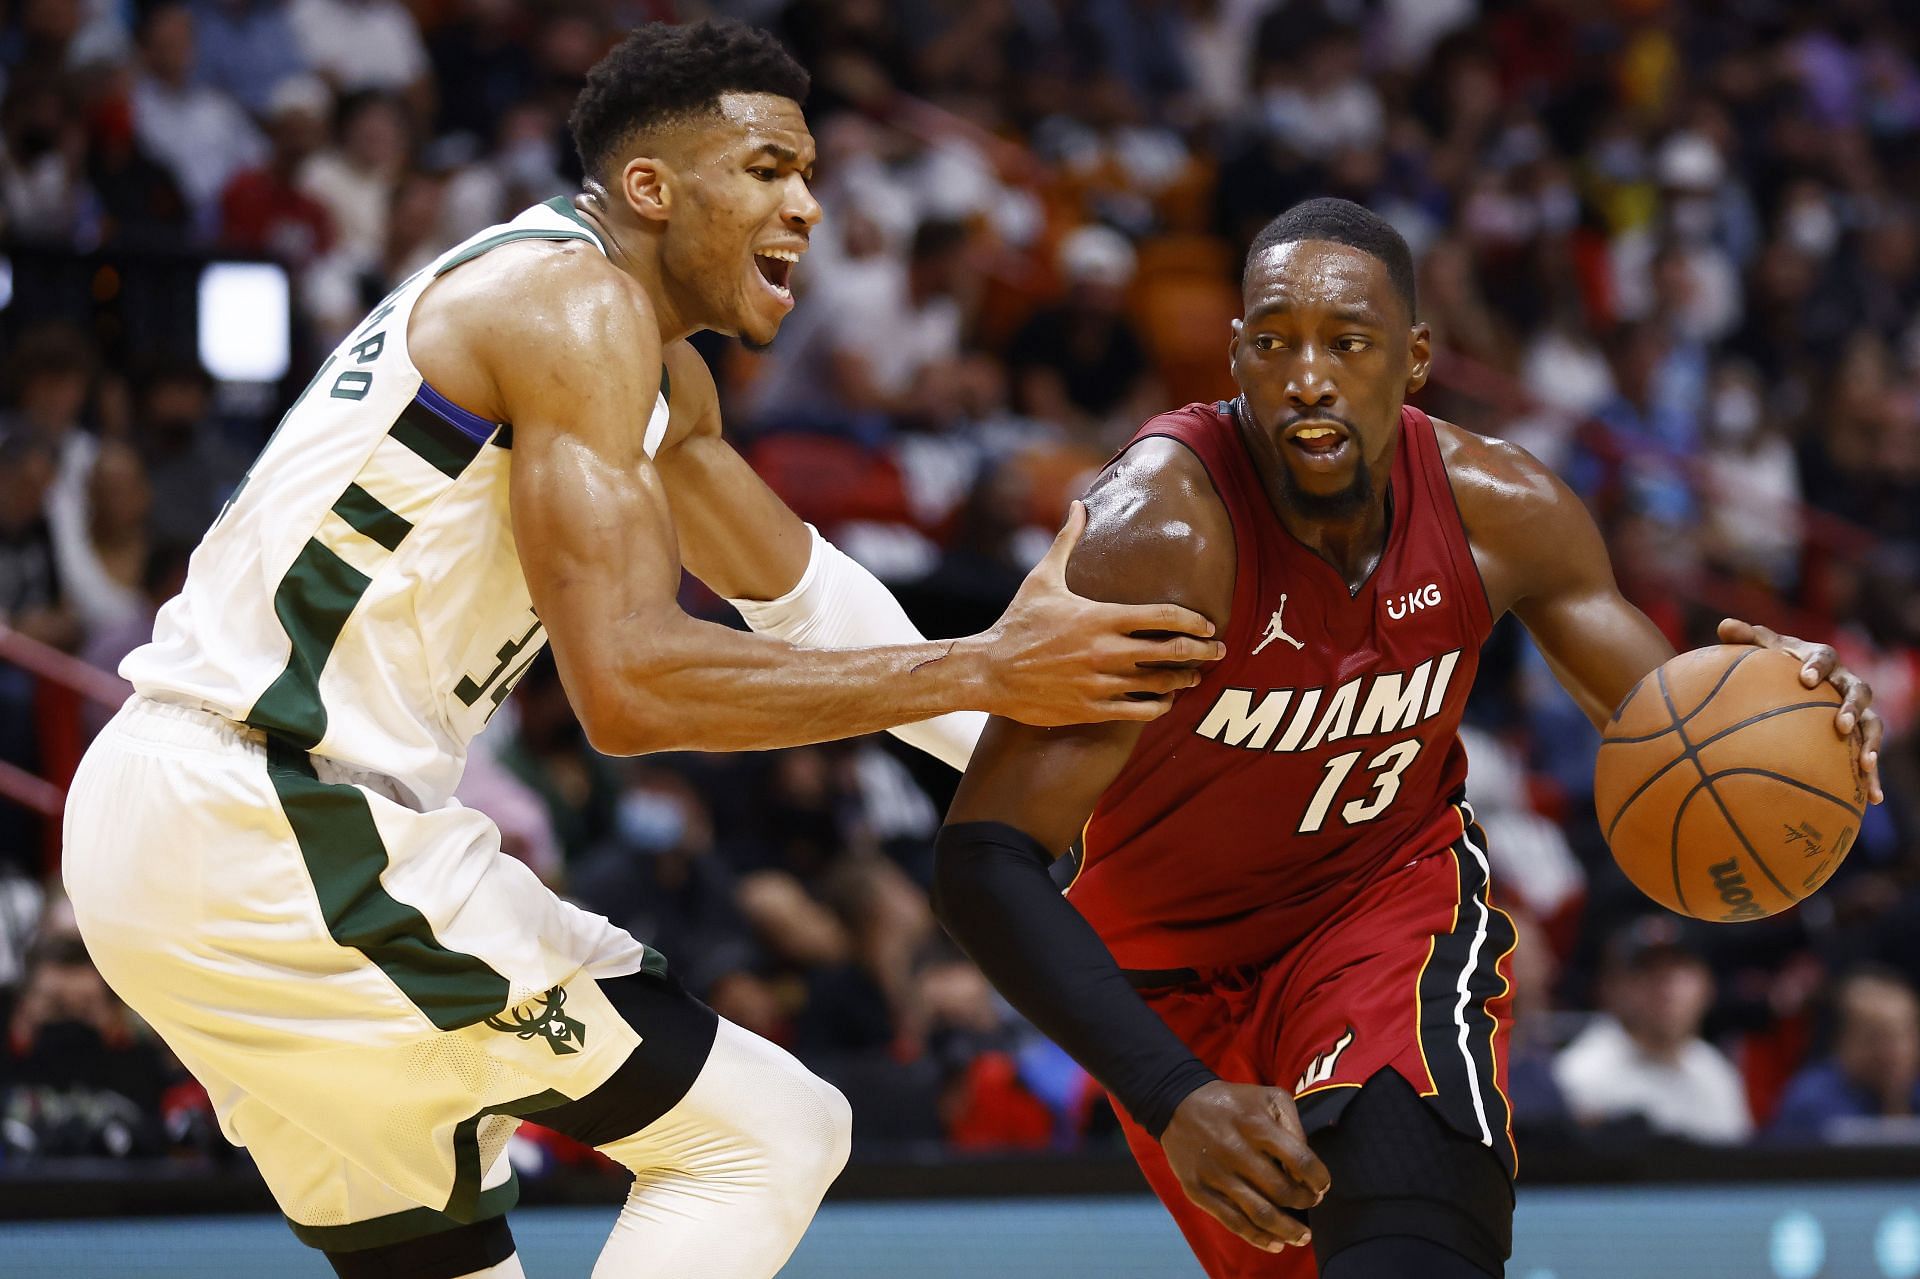 Miami Heat All-Star Bam Adebayo driving into the paint against Giannis Antetokounmpo